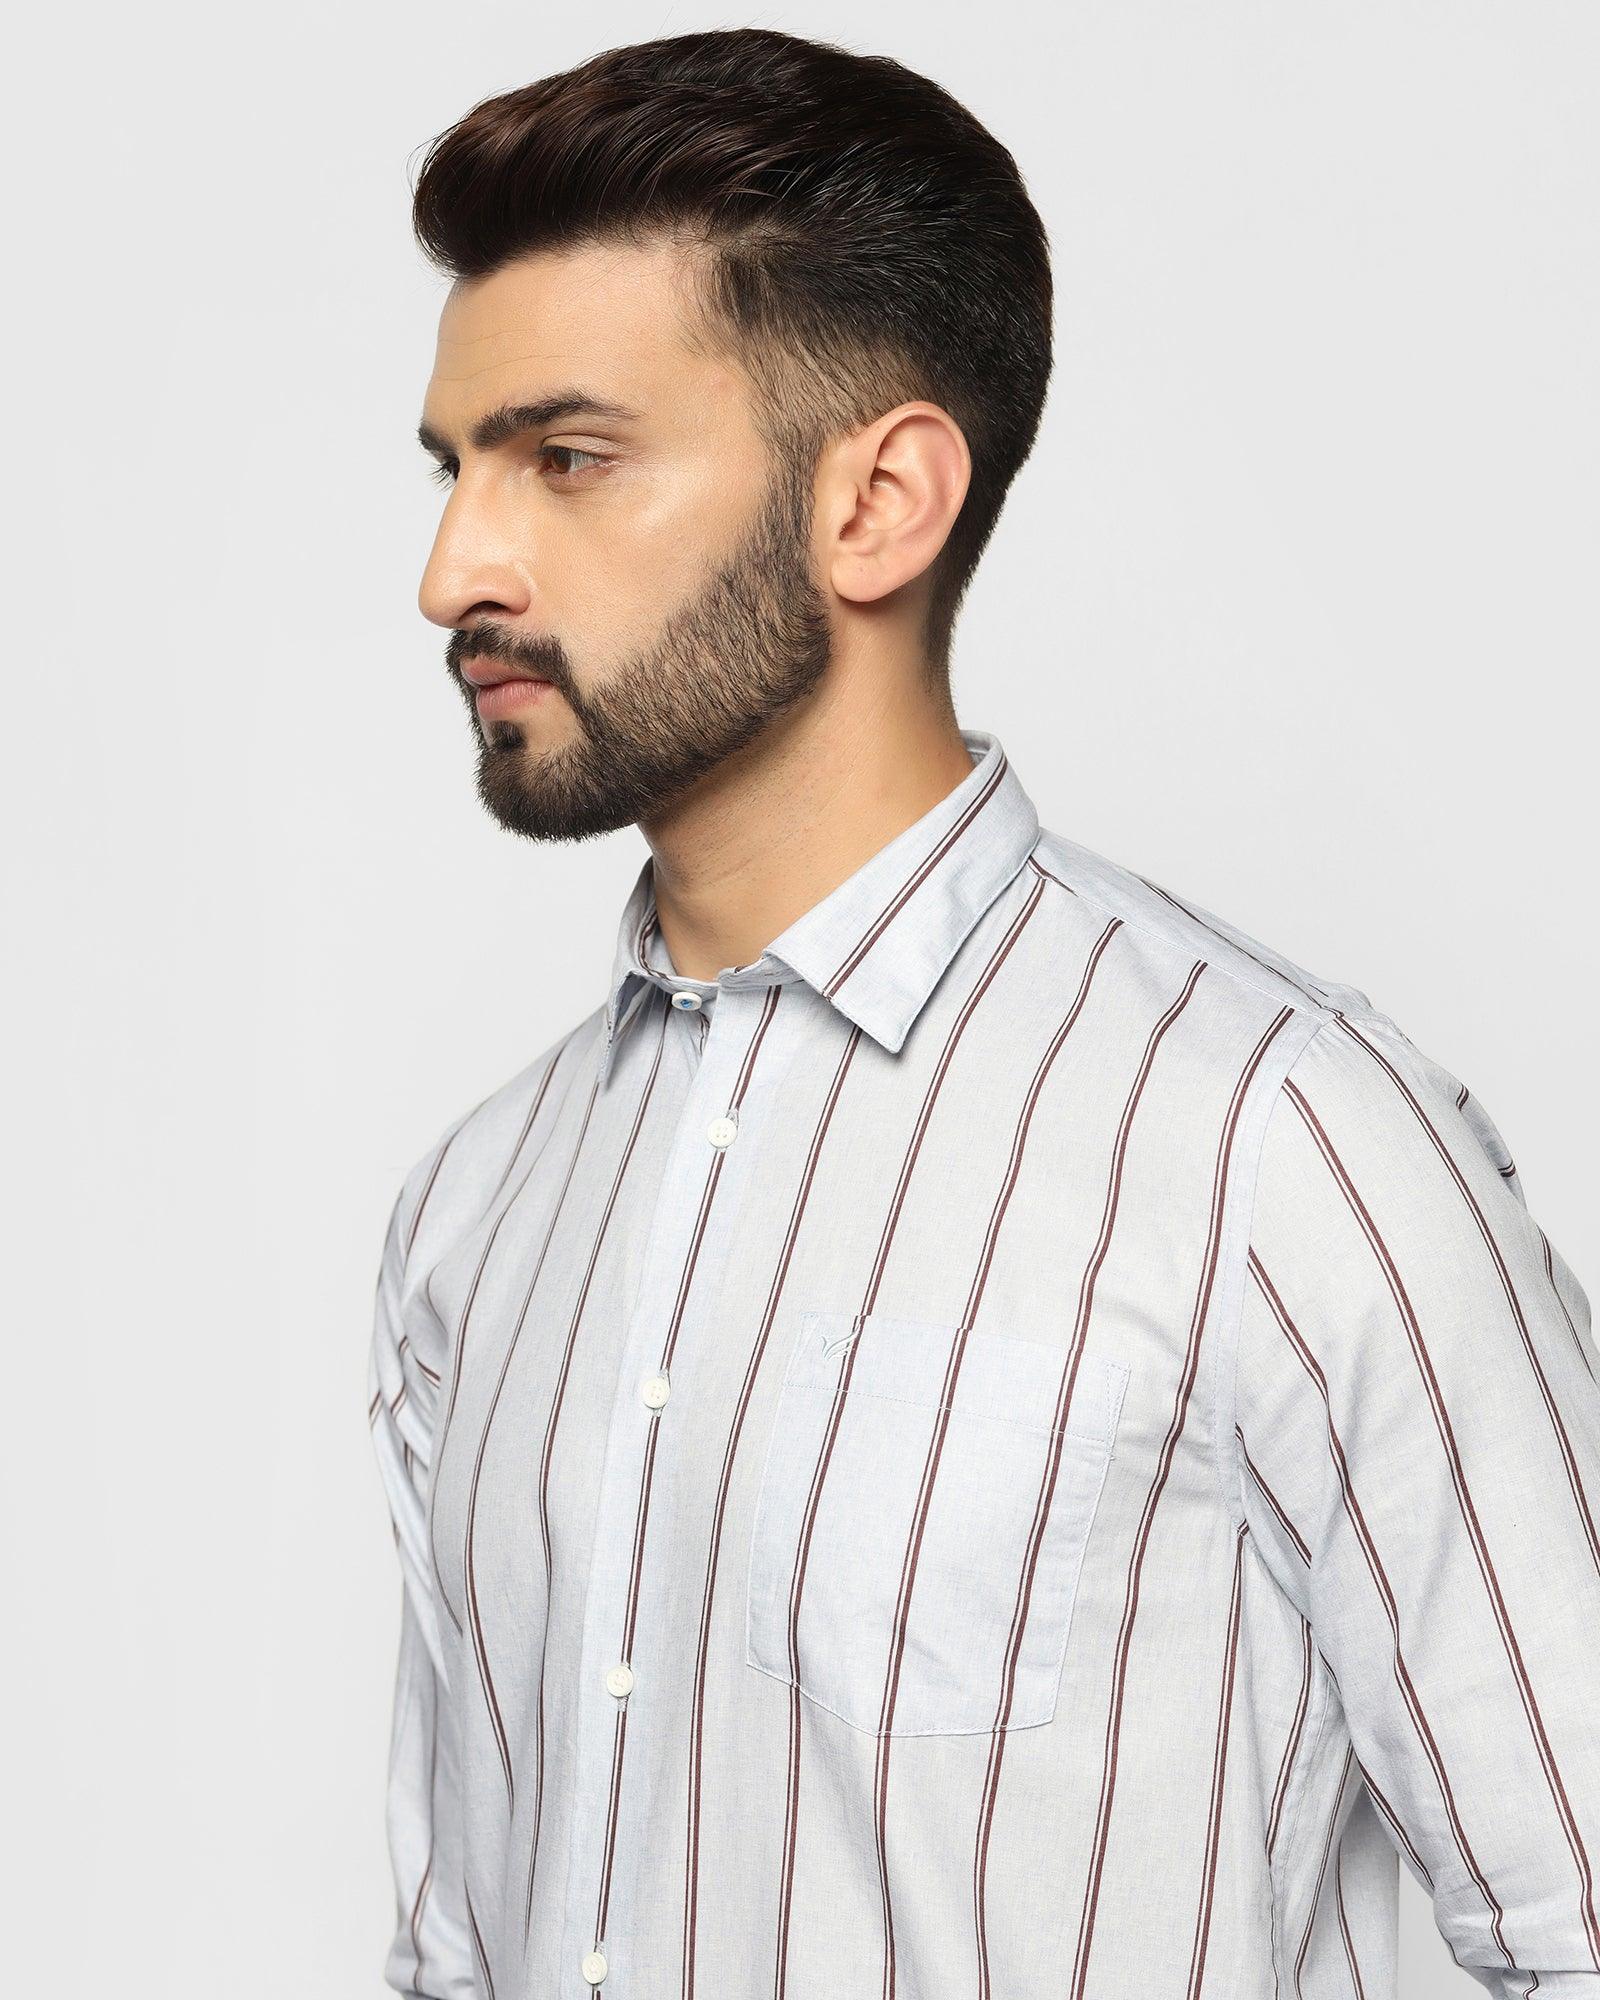 Casual Brown Striped Shirt - Tim